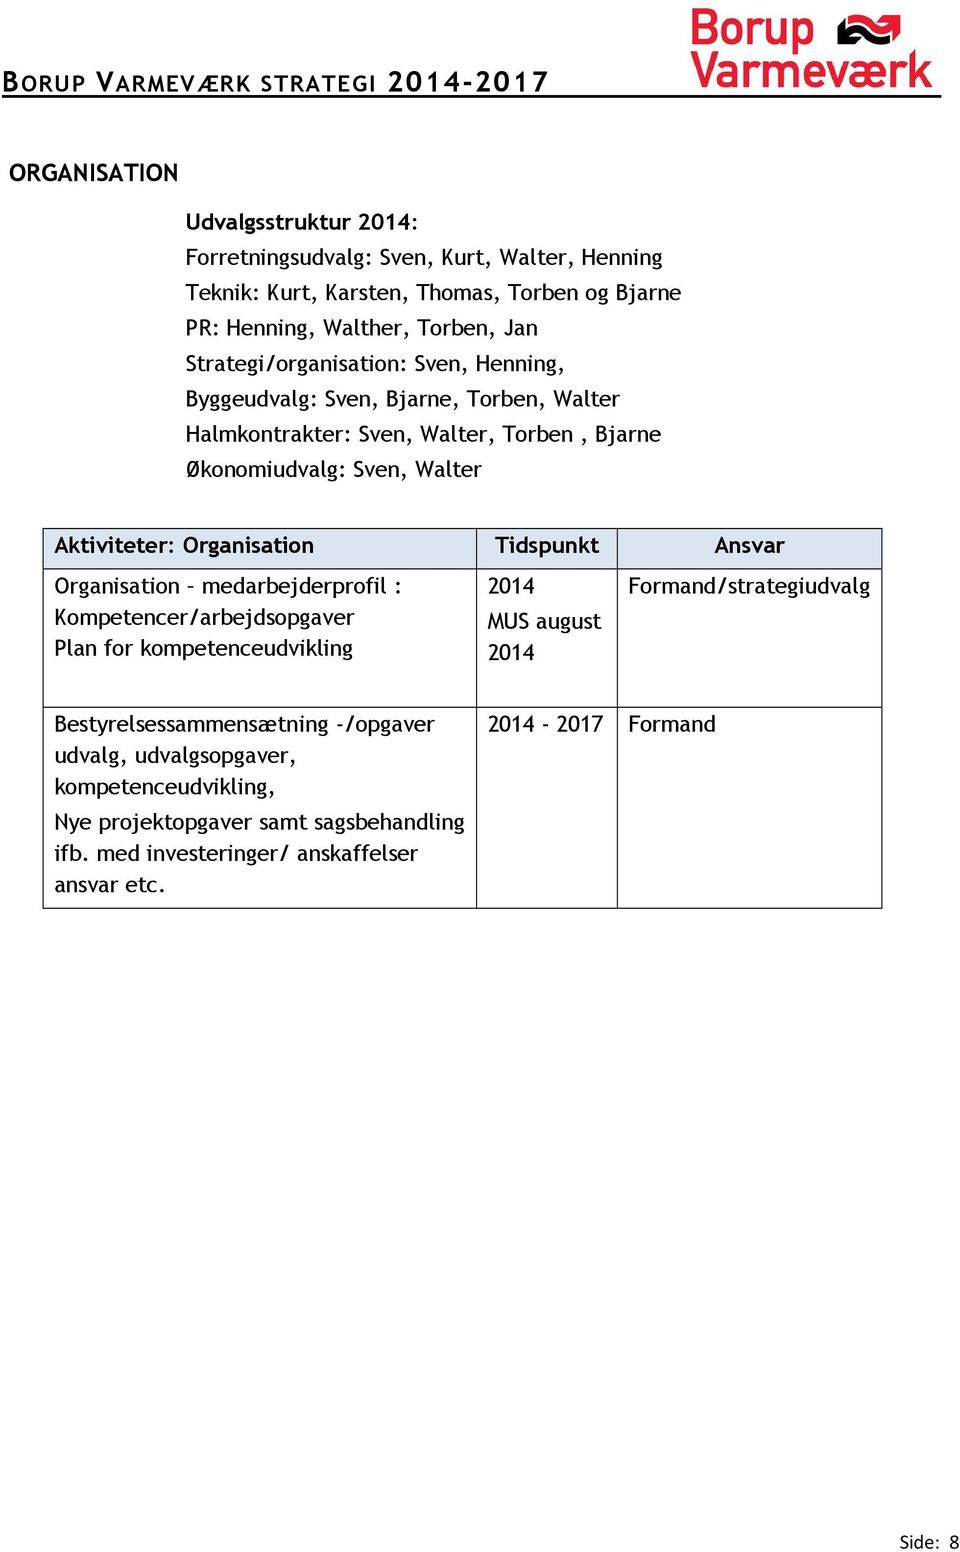 Organisation Tidspunkt Ansvar Organisation medarbejderprofil : Kompetencer/arbejdsopgaver Plan for kompetenceudvikling 2014 MUS august 2014 Formand/strategiudvalg